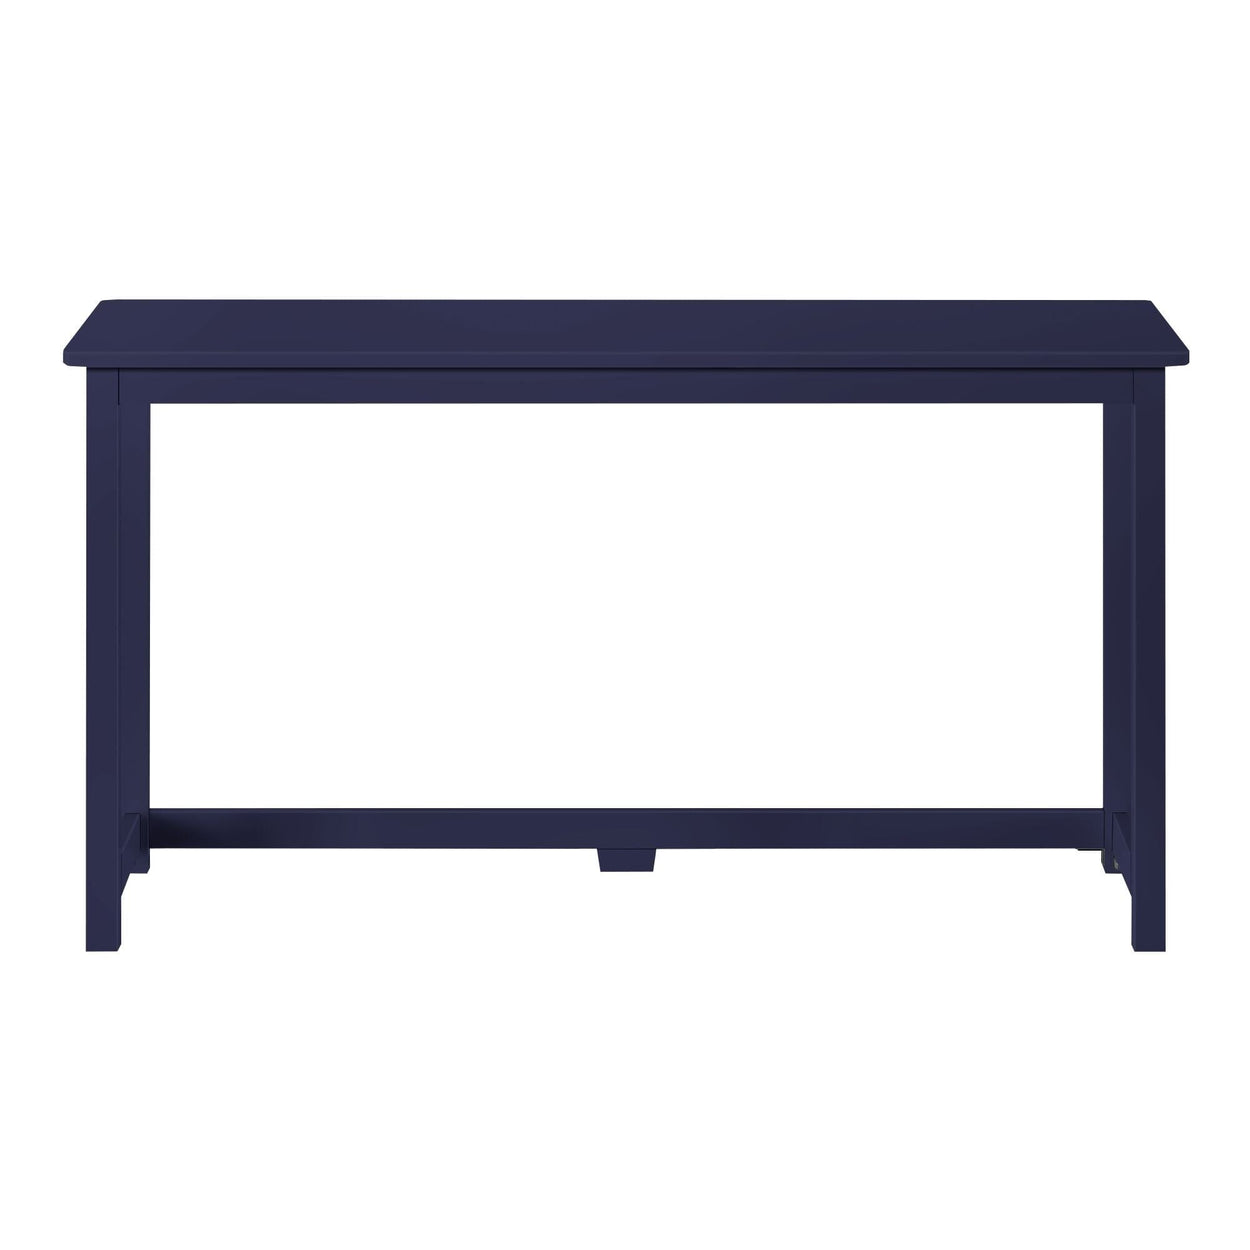 181400-131 : Furniture Simple Desk - 55 inches, Blue